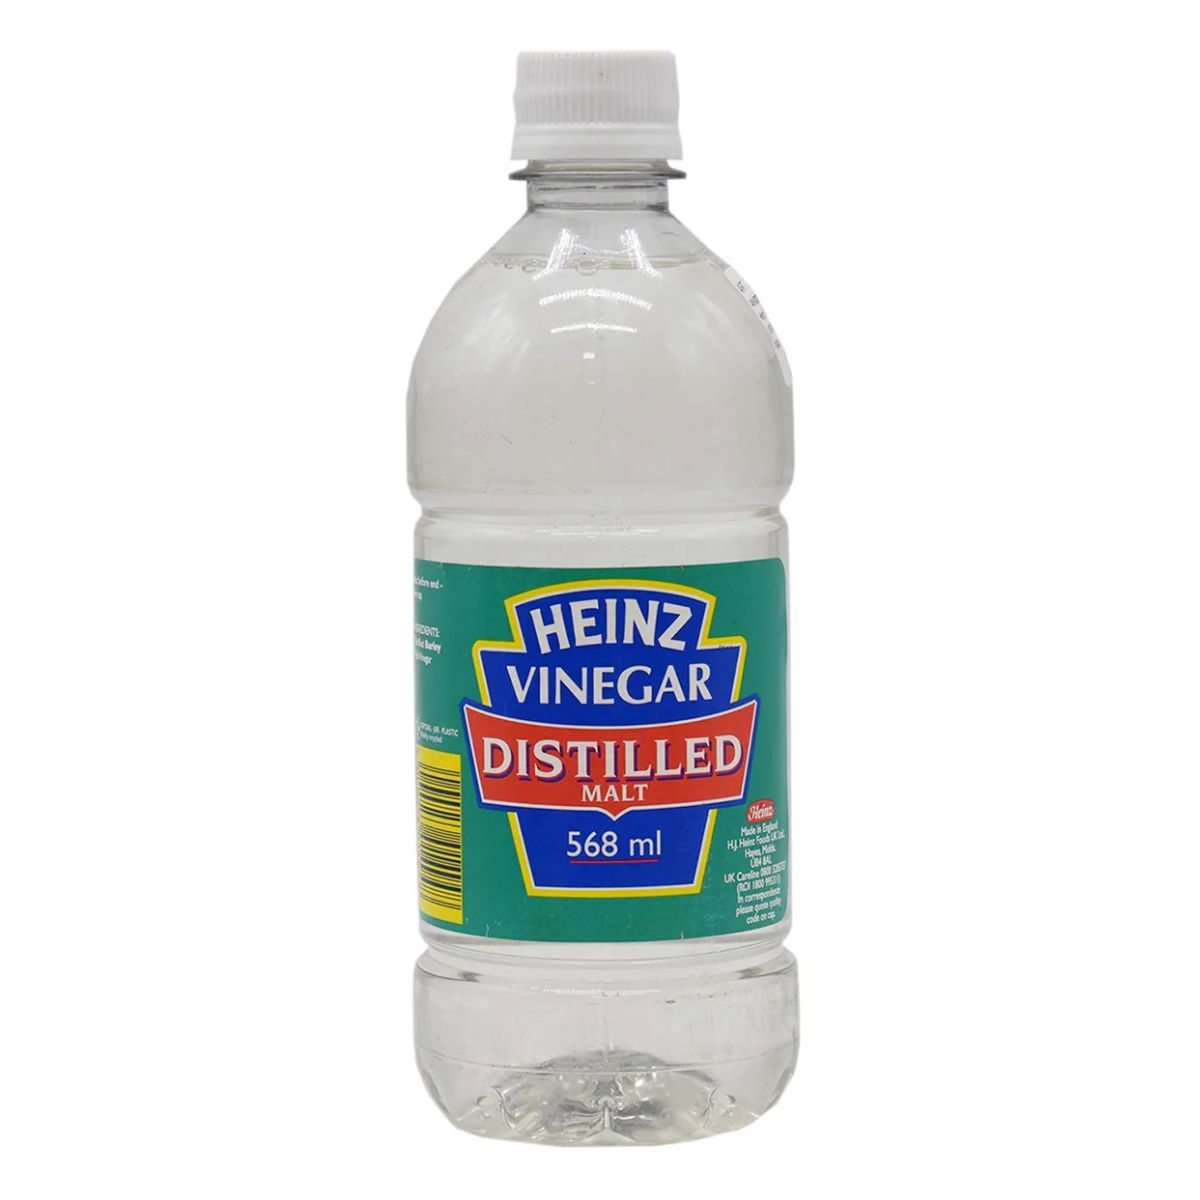 A clear plastic bottle of Heinz - Vinegar Distilled Malt - 568g.